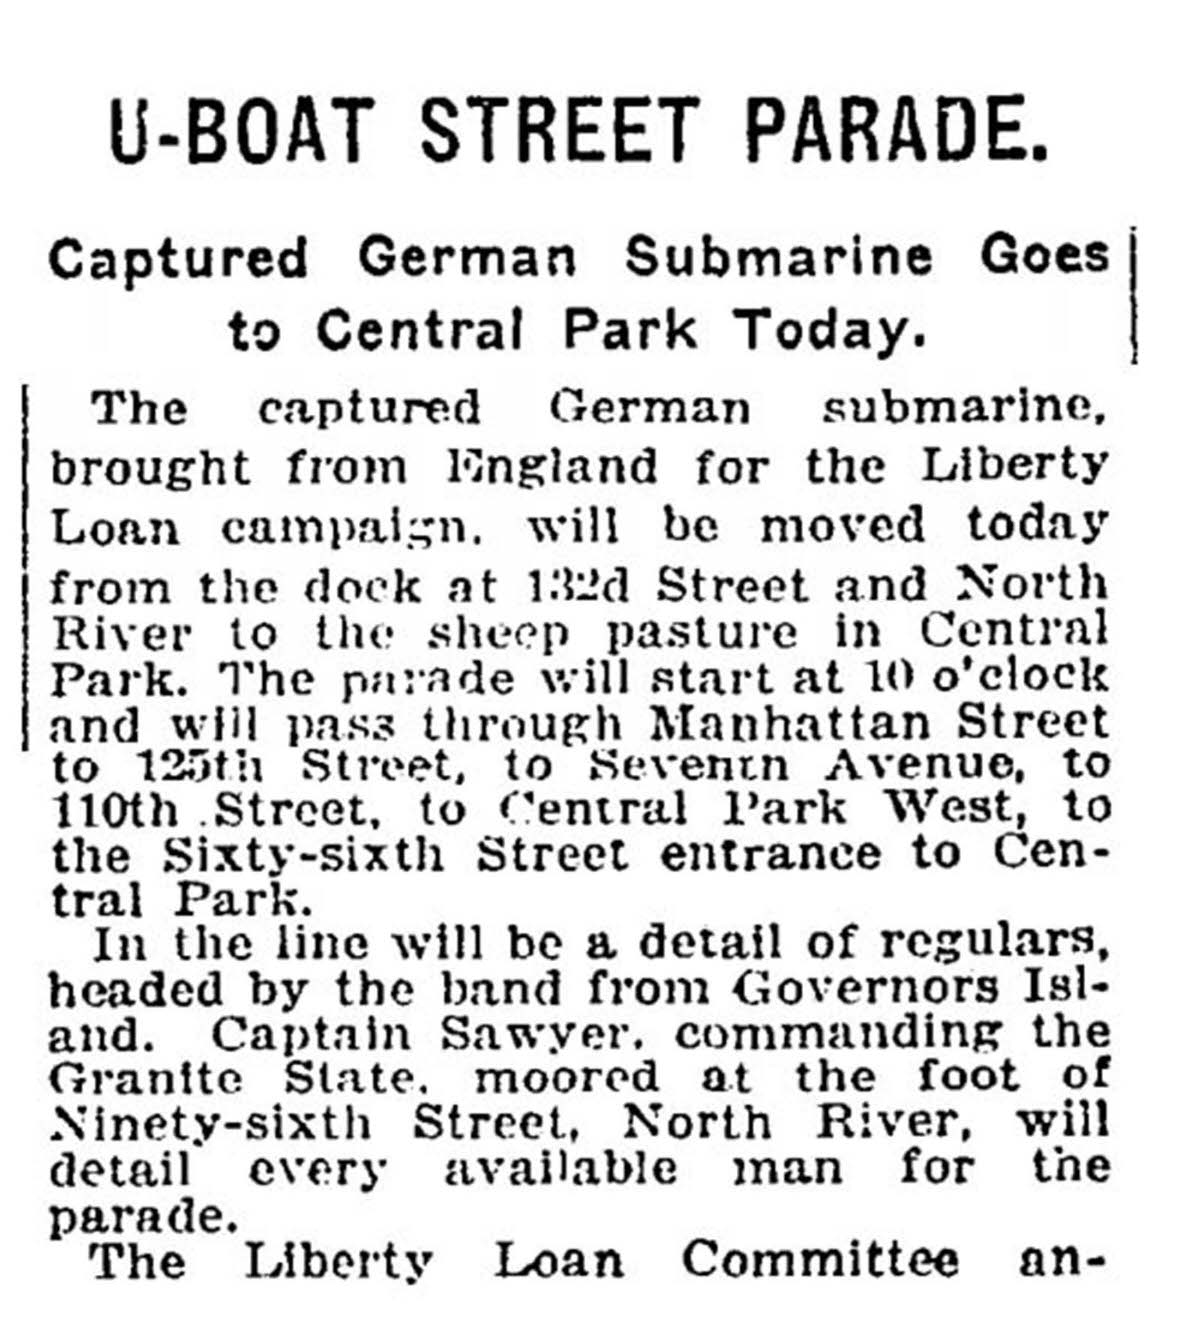 A newspaper article titled “U-Boat Street Parade”.